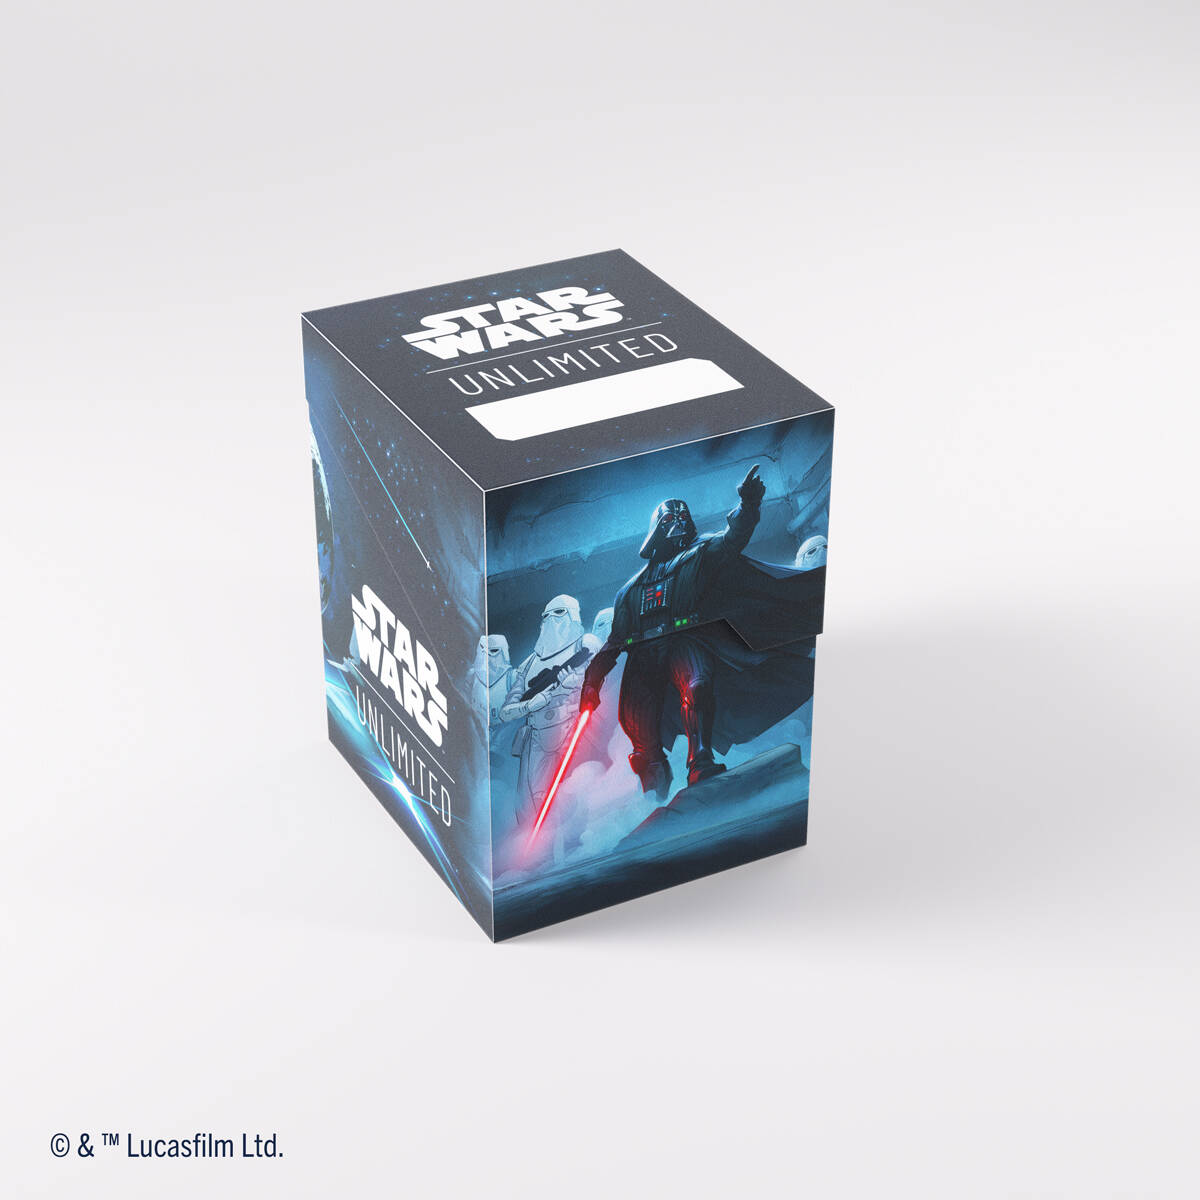 Star Wars: Unlimited Soft Crate Vader